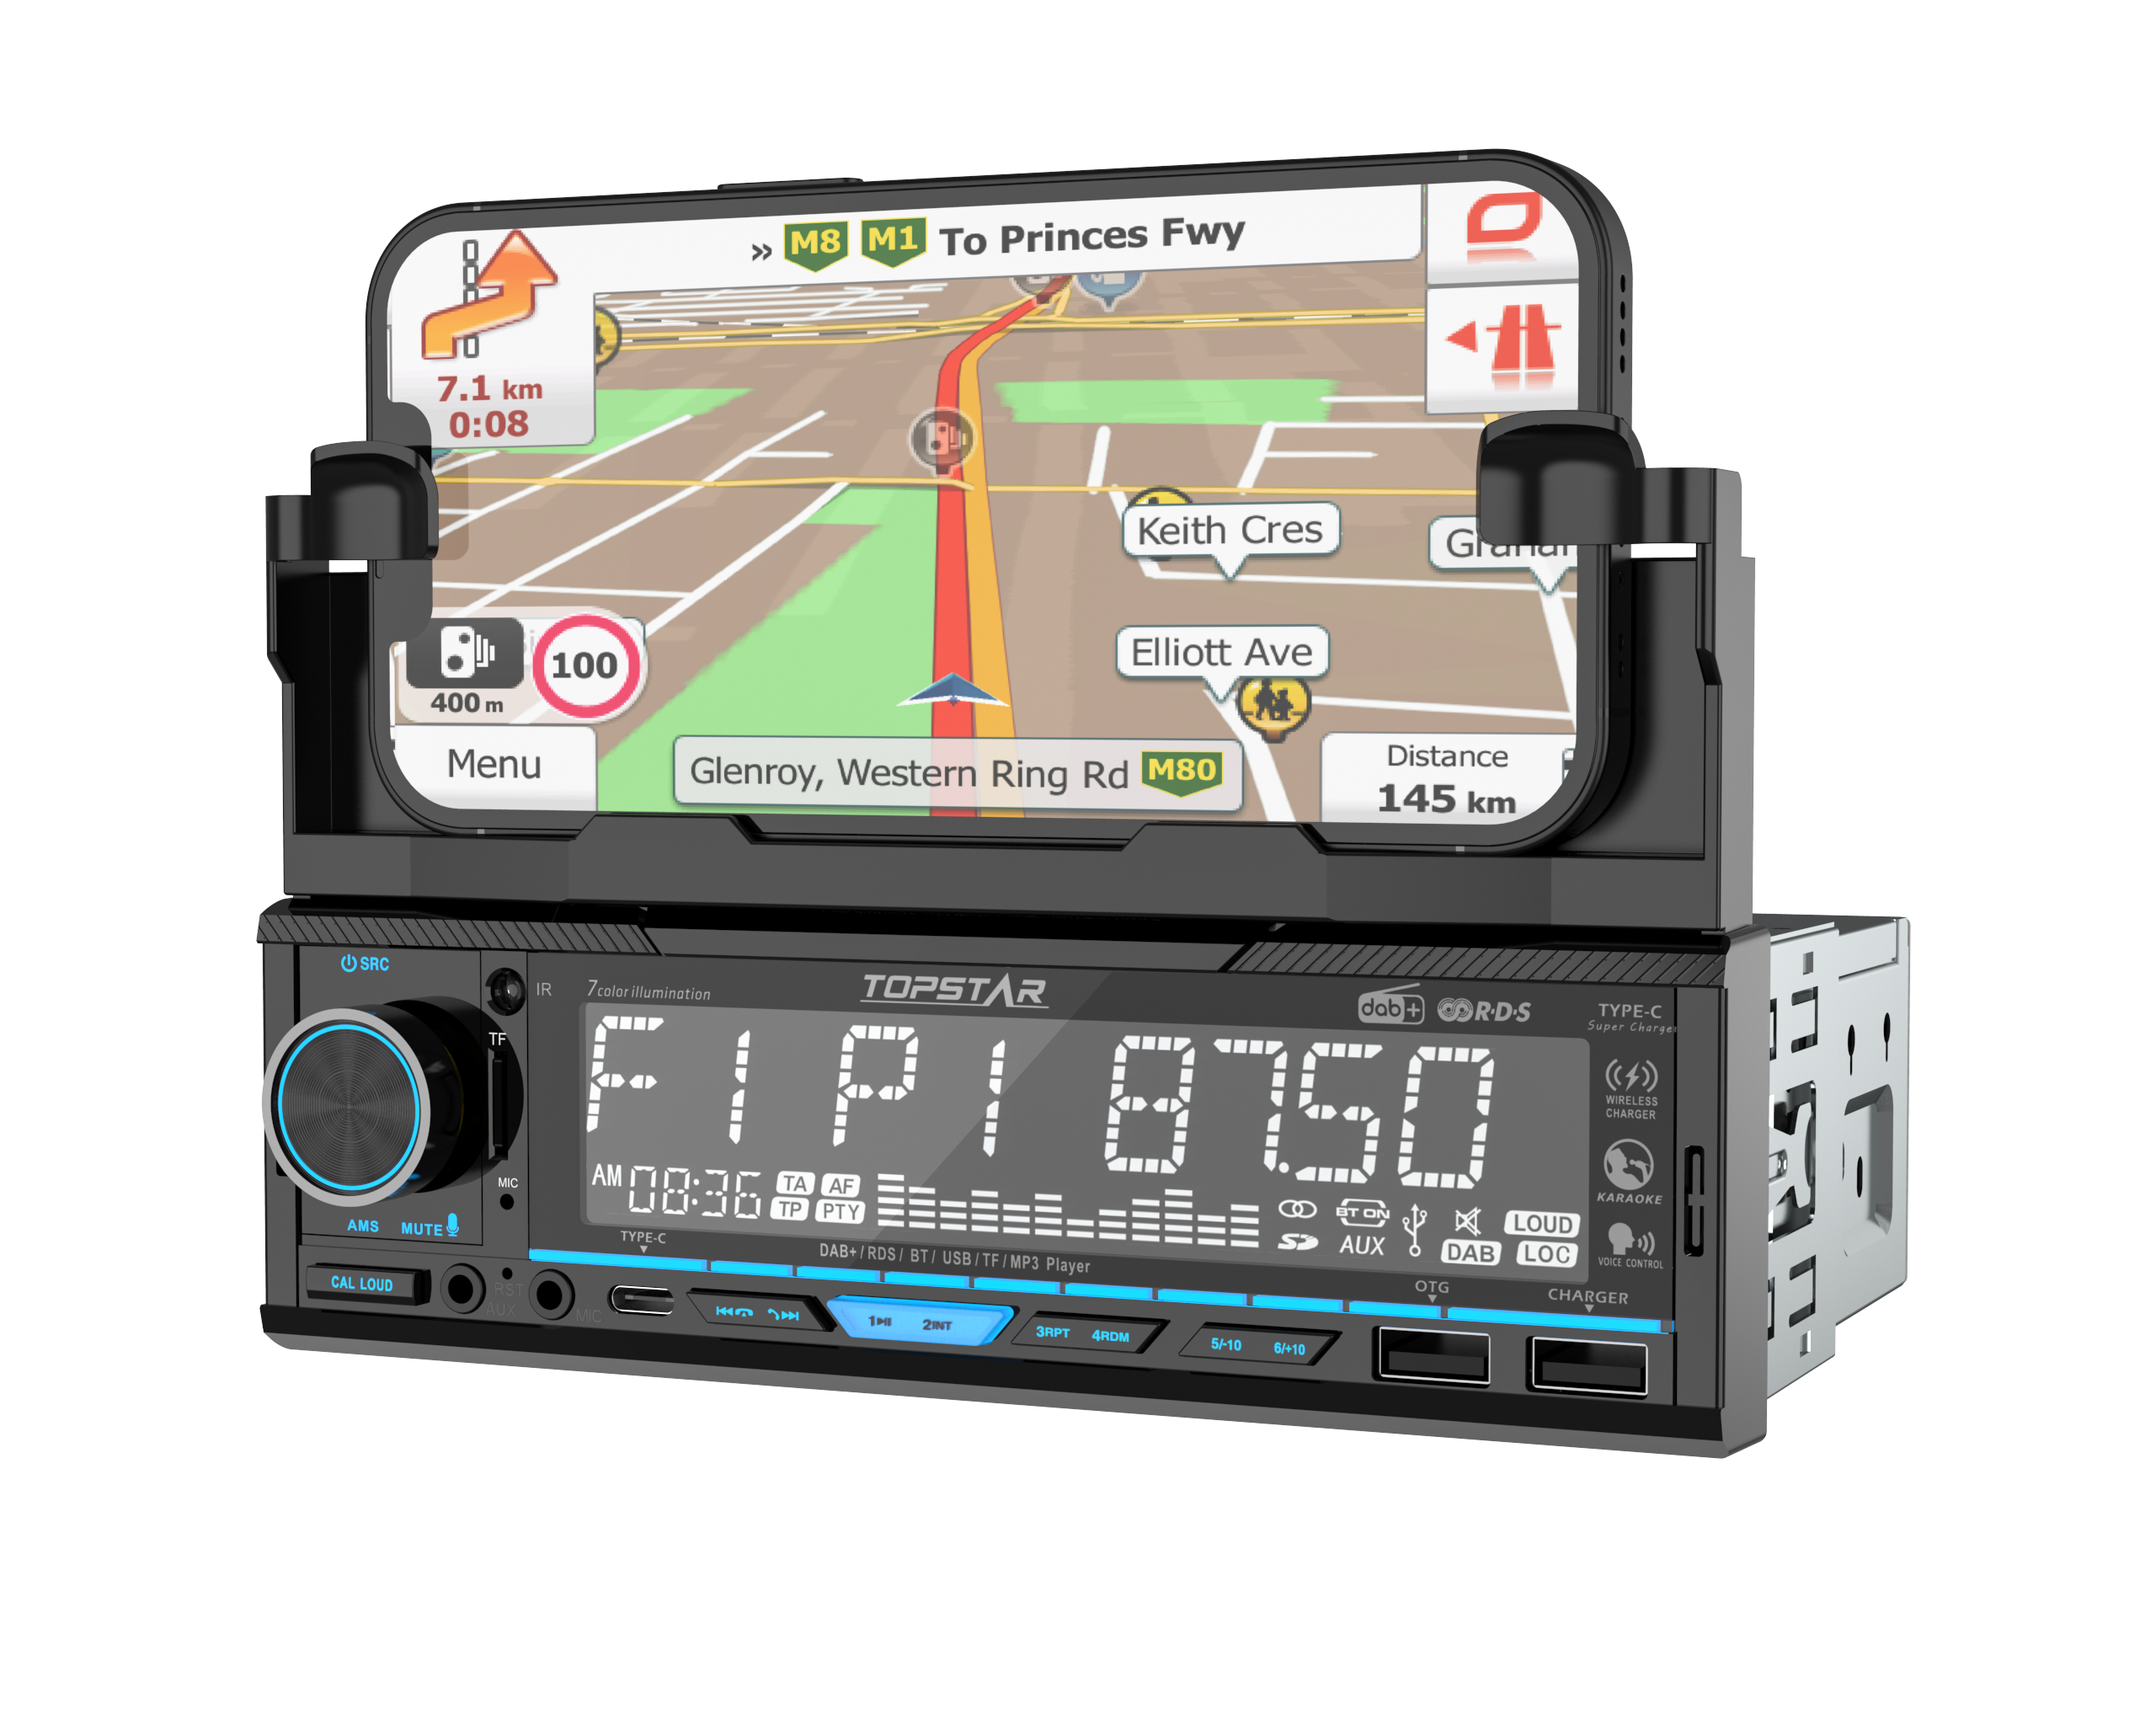 Hochwertiges Auto-MP3-Stereo mit festem Panel